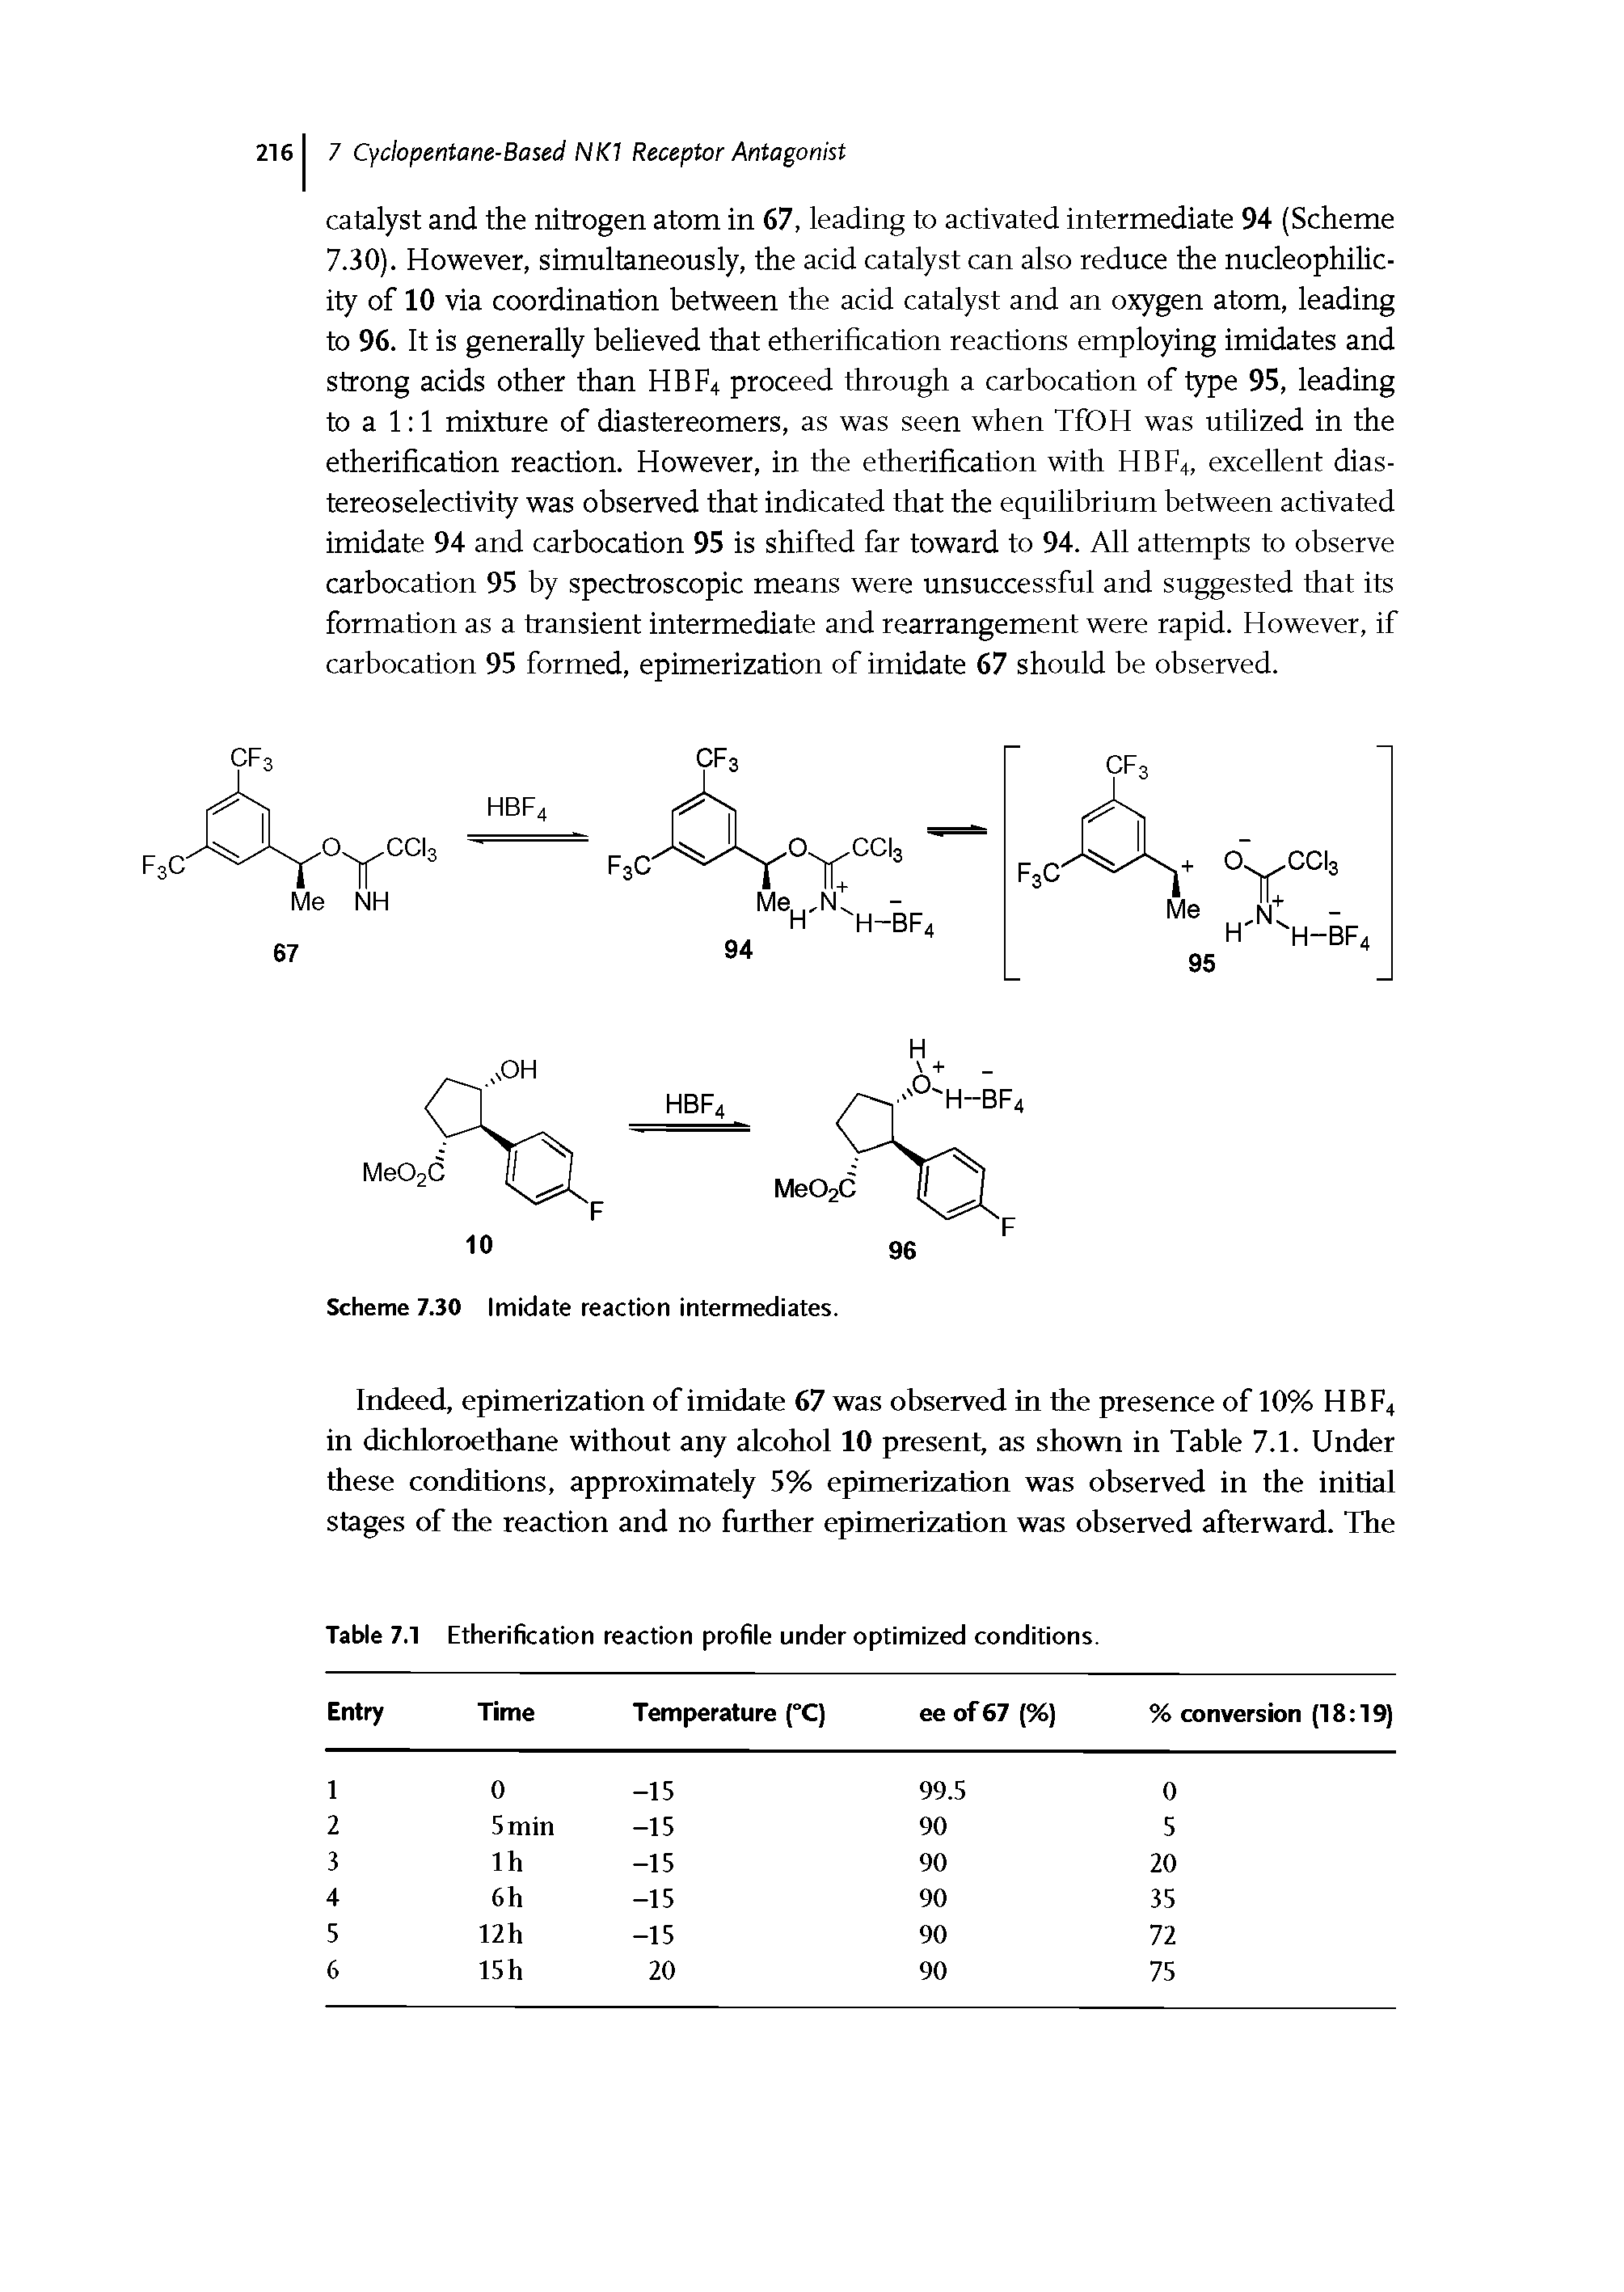 Table 7.1 Etherification reaction profile under optimized conditions.